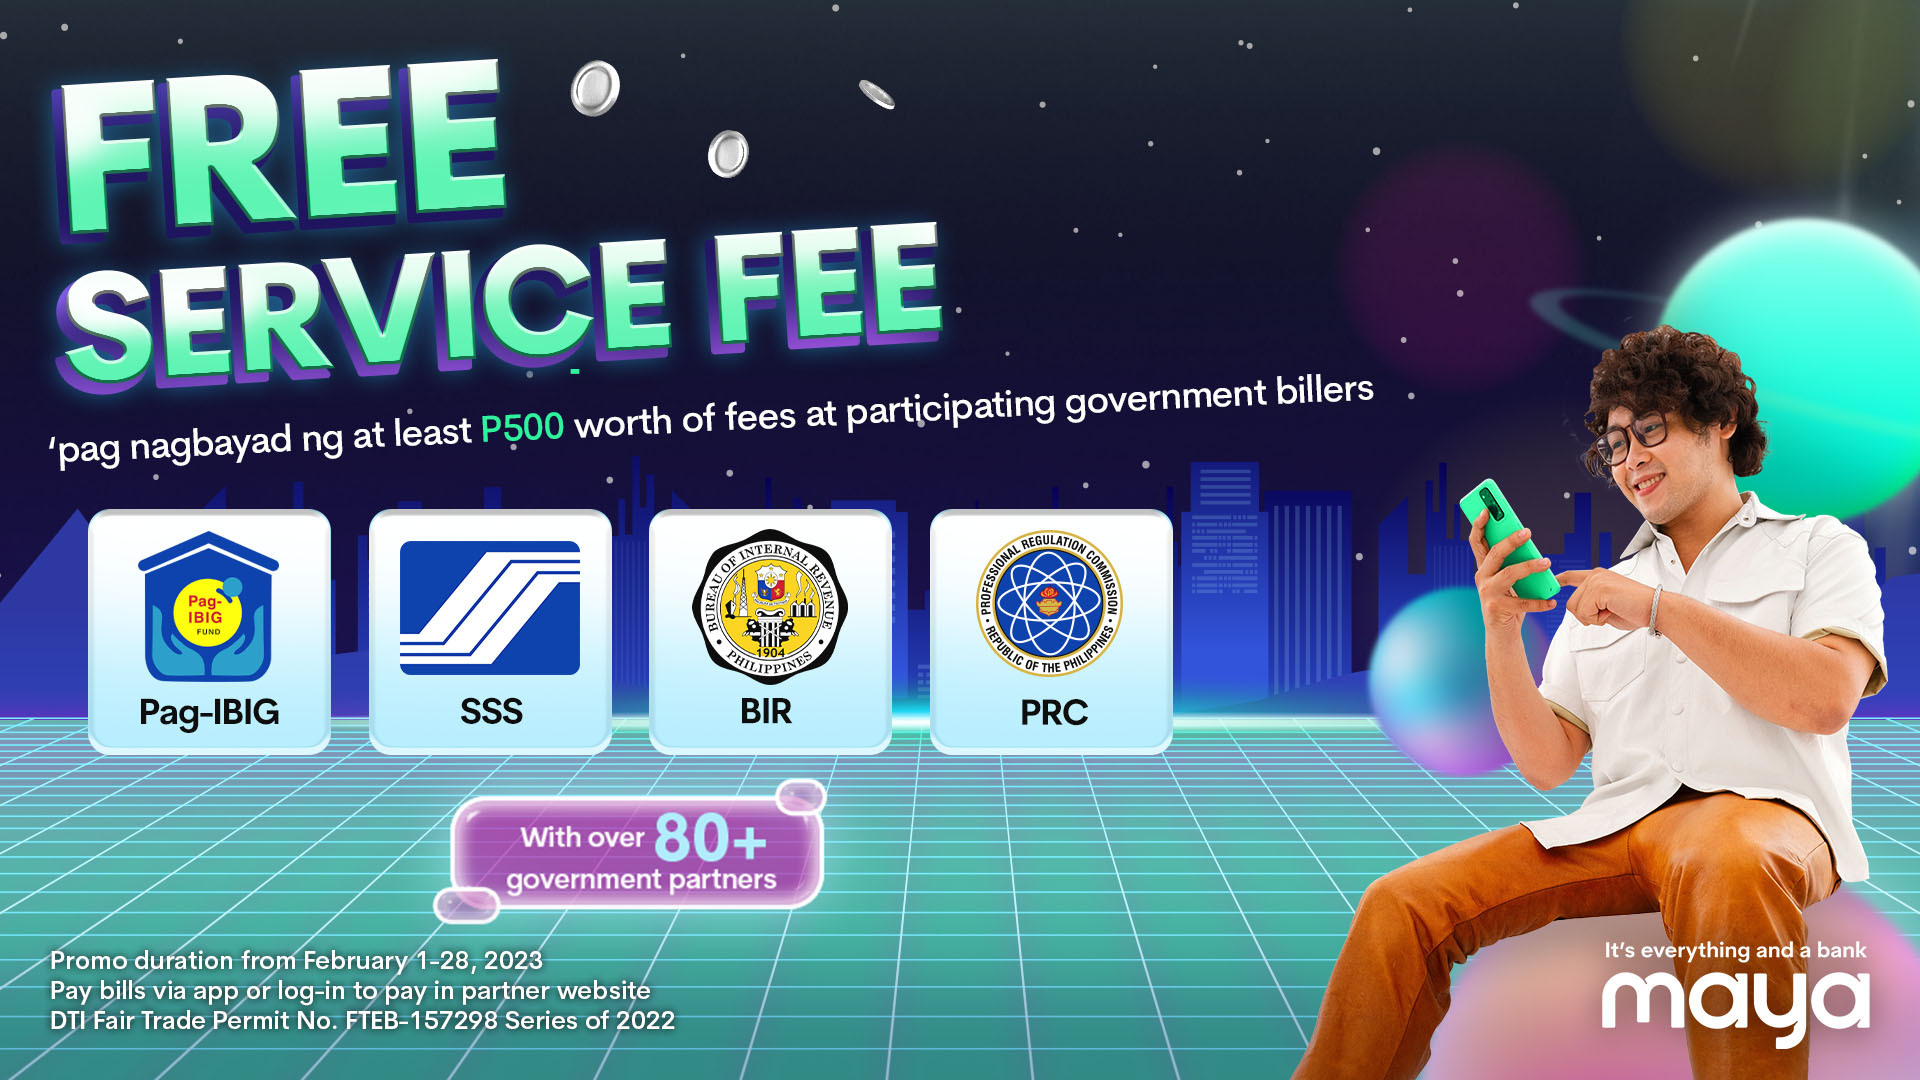 013123 - Free Service Fee Feb Deals